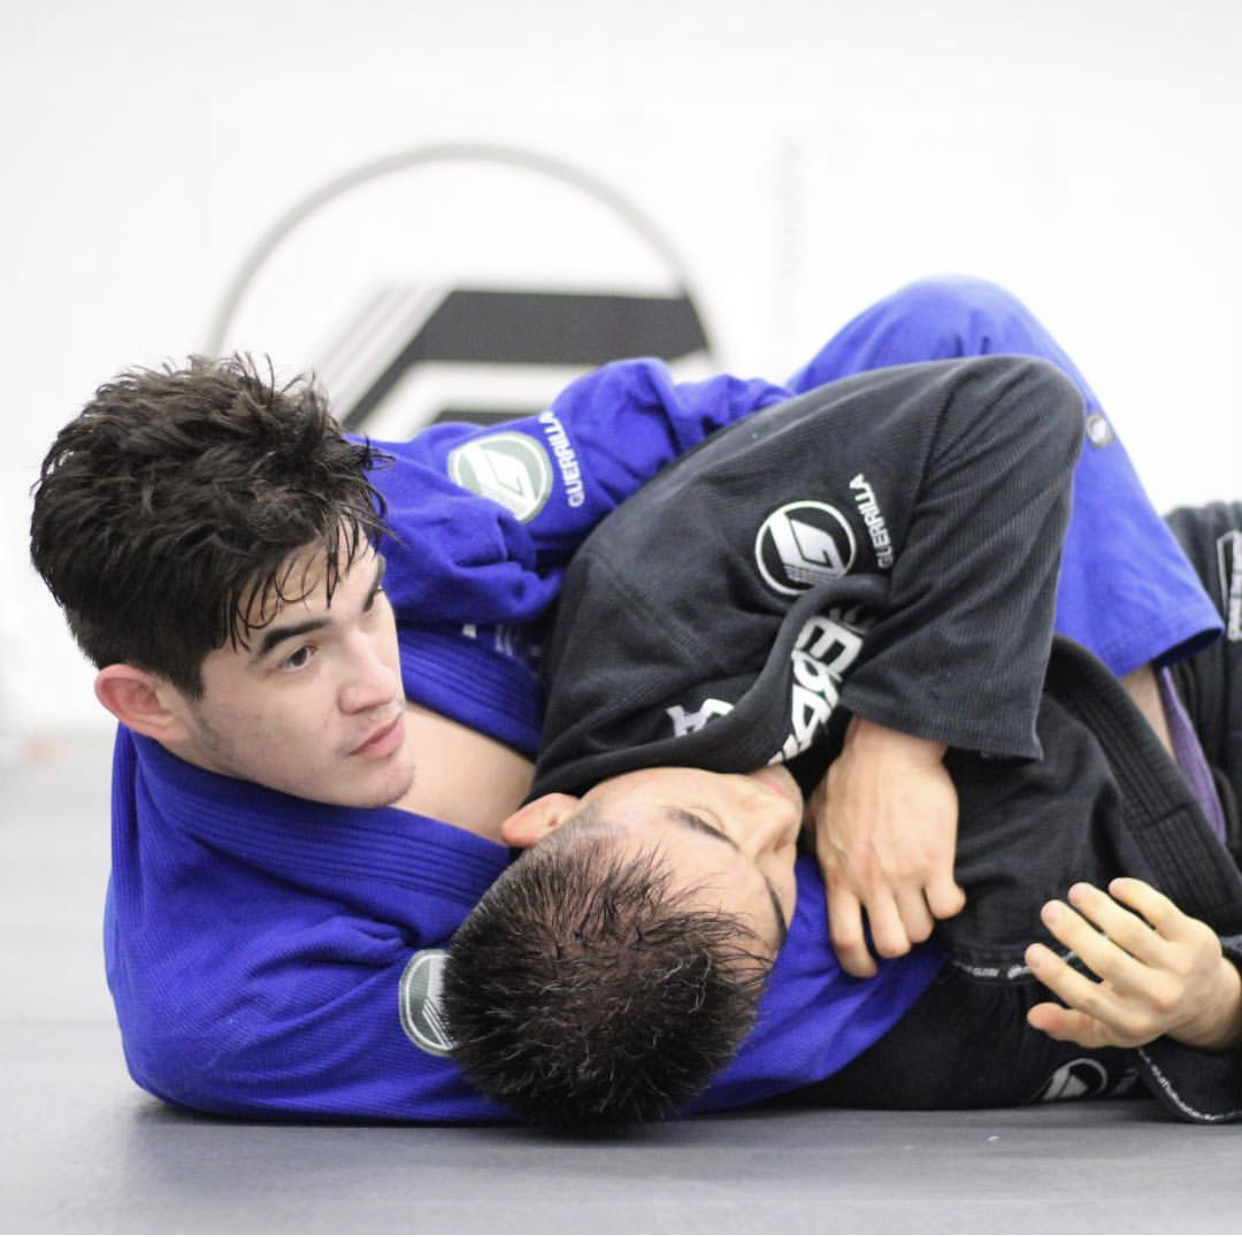 Learn the basics of dominant jiu-jitsu positions